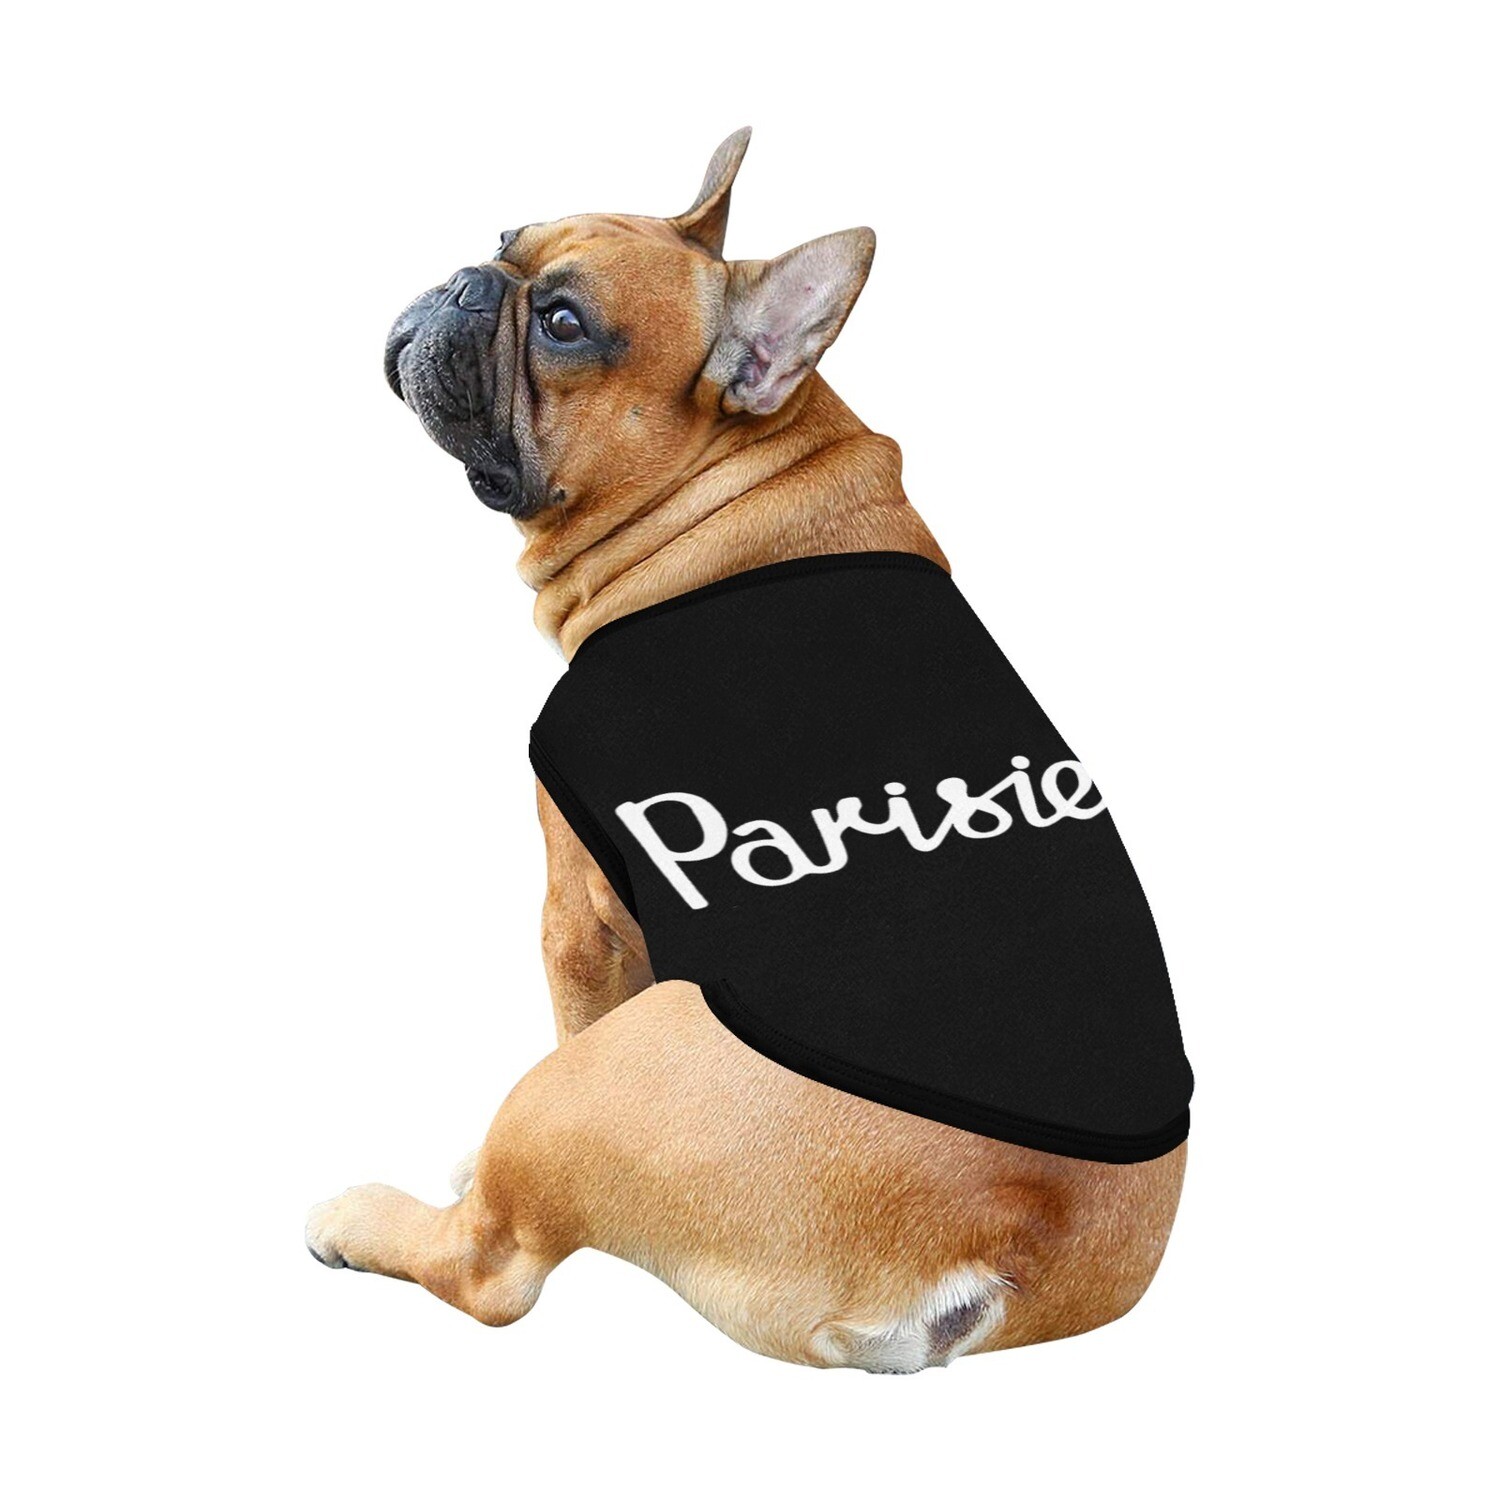 🐕 David Rose Parisien Dog t-shirt, Dog Tank Top, Dog shirt, Dog clothes, Gifts, front back print, 7 sizes XS to 3XL, Schitt's Creek, TV series